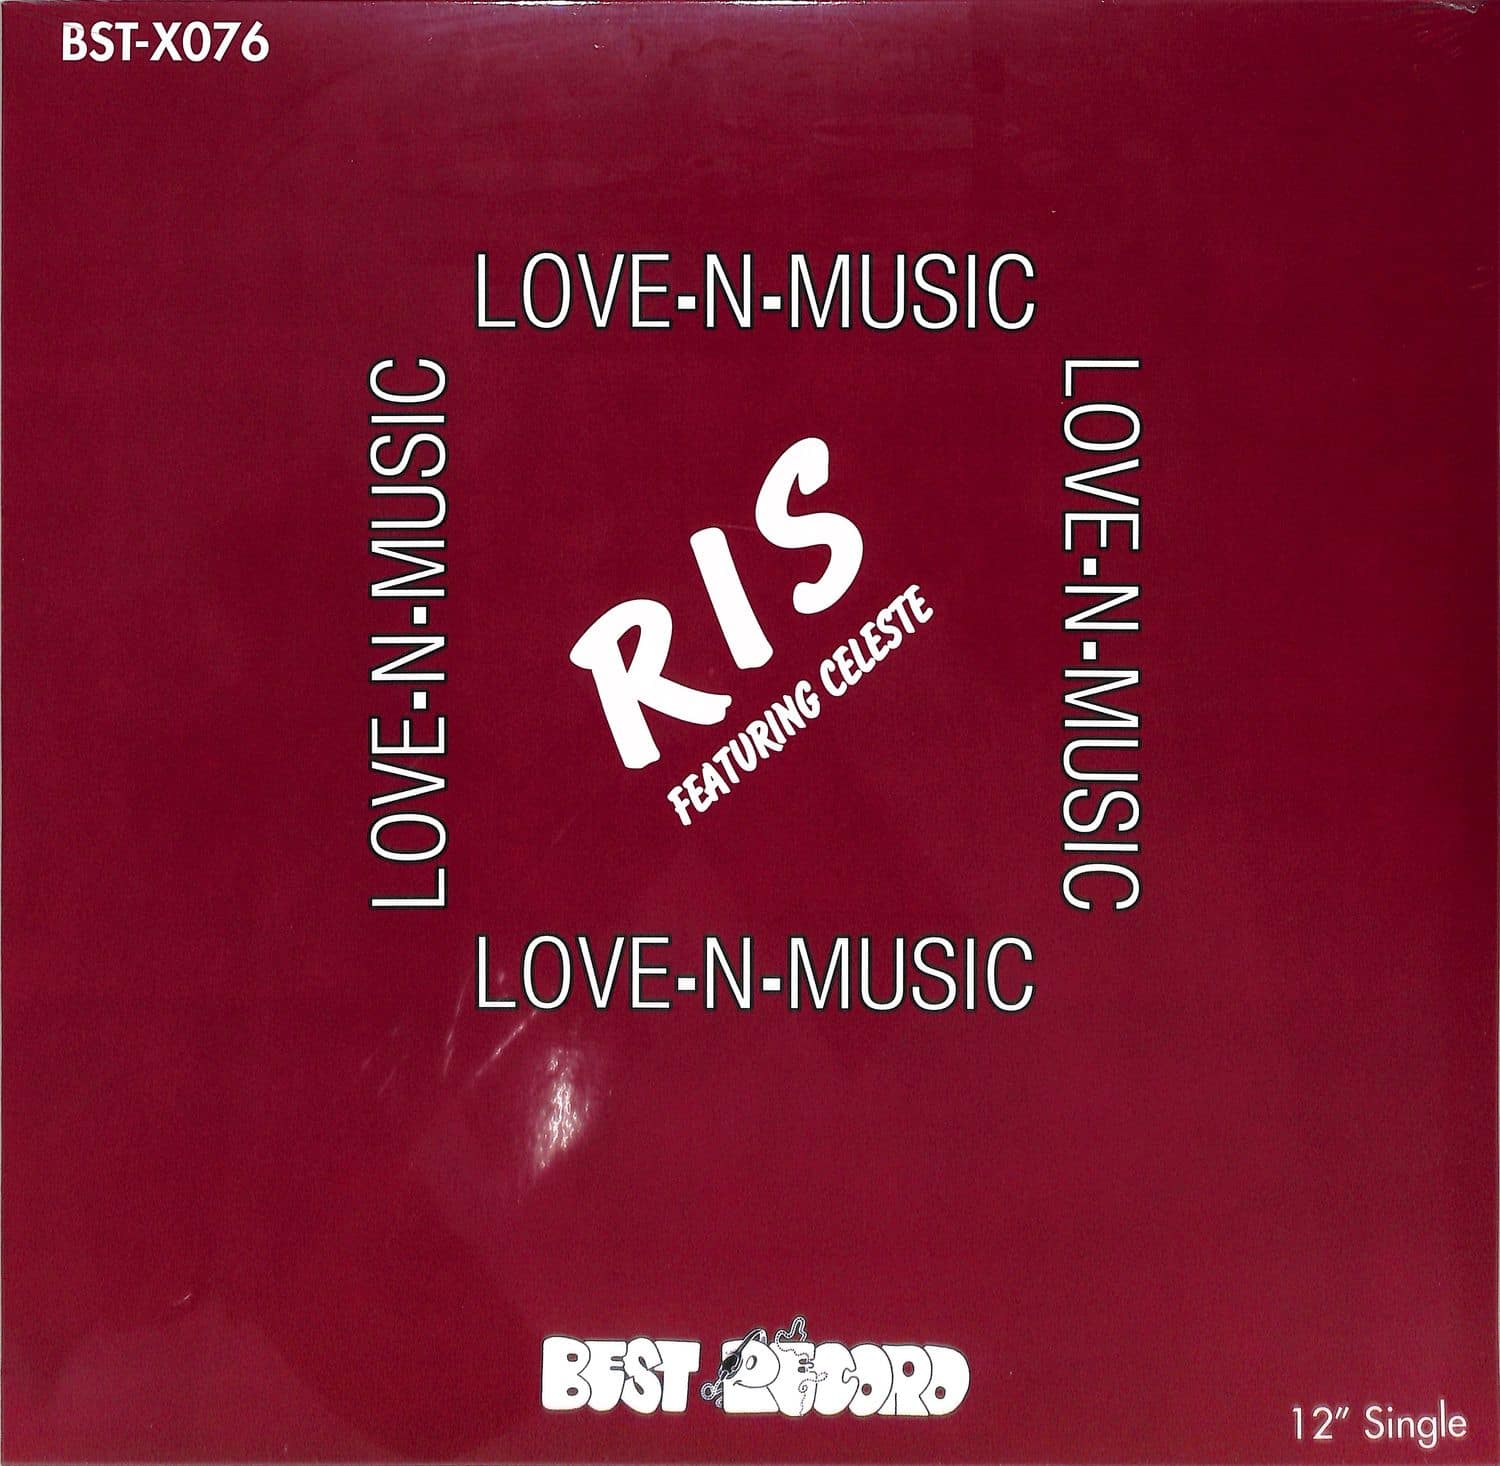 RIS Featuring Celeste - LOVE N MUSIC